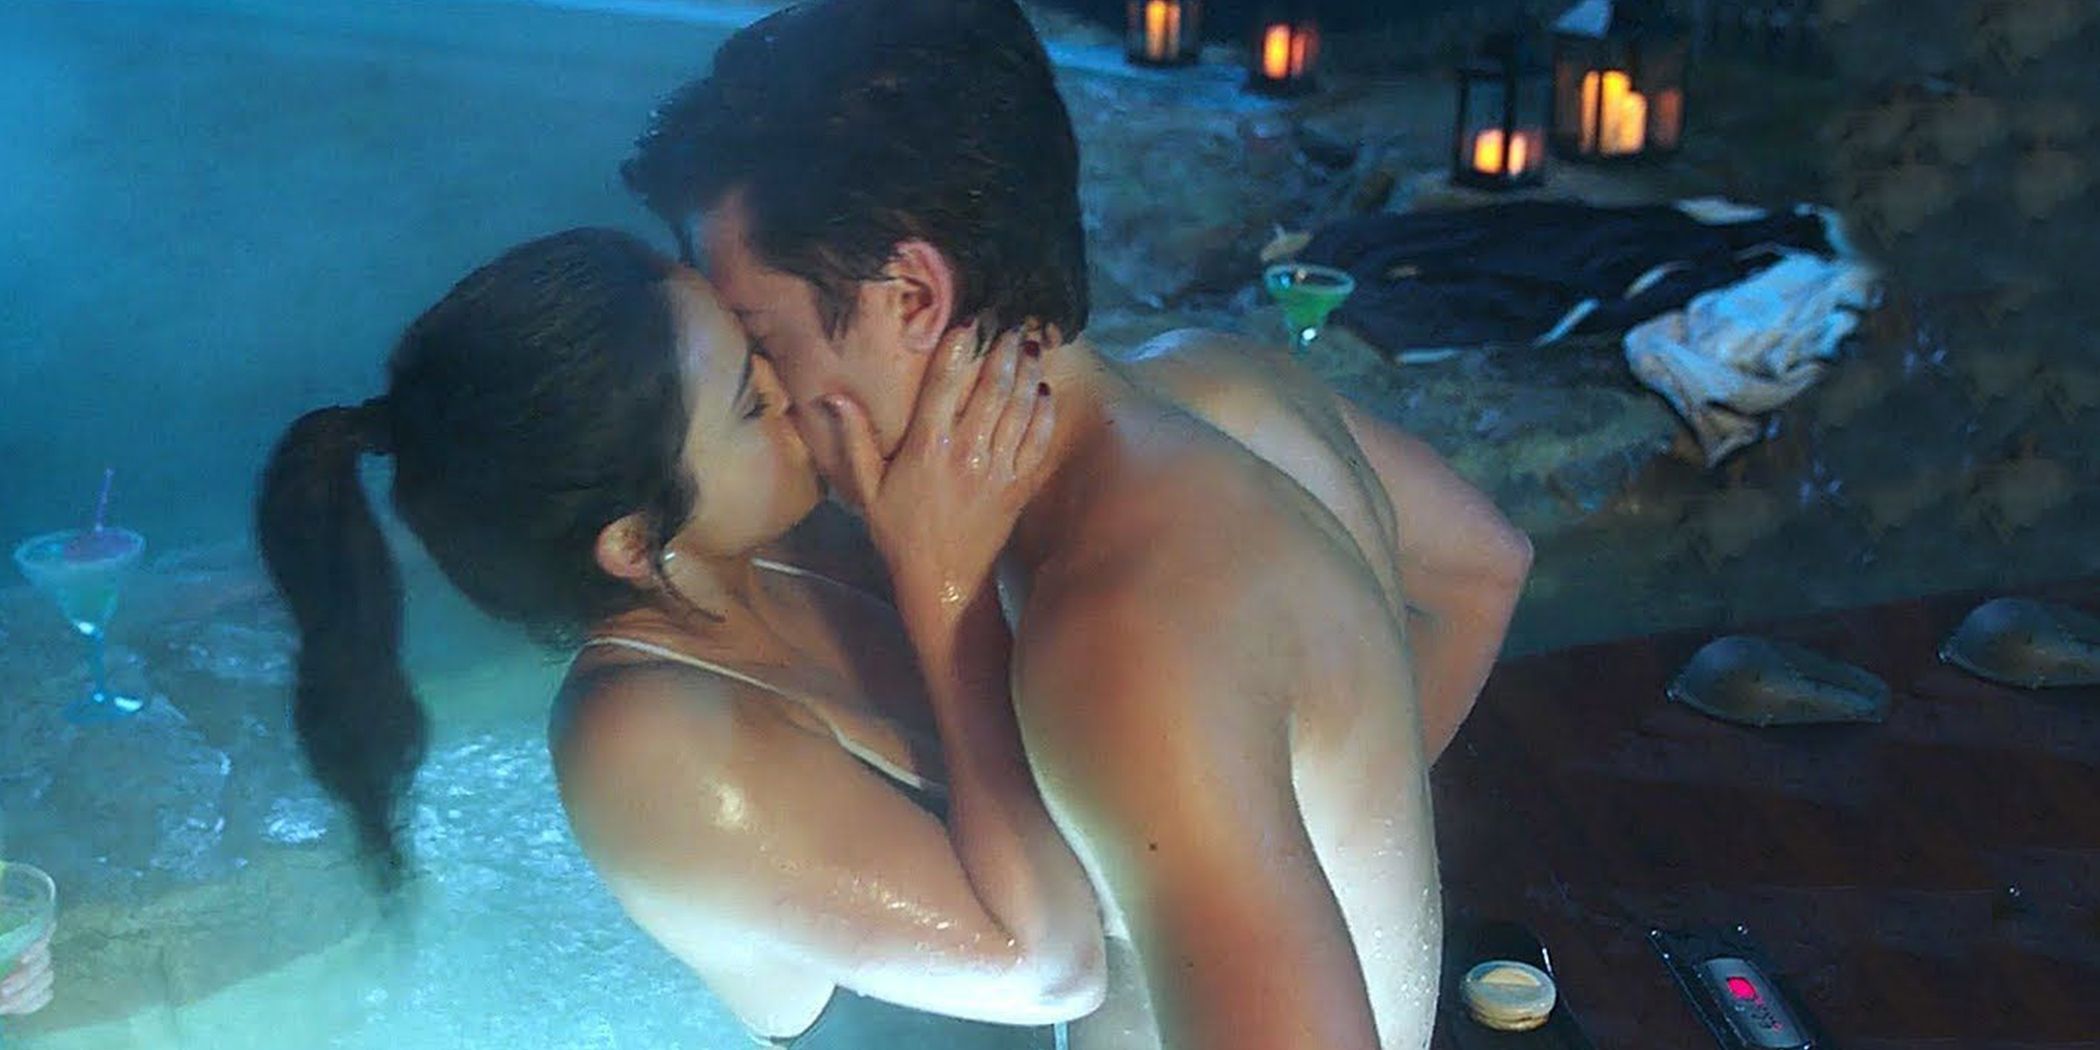 6 Jughead Kisses Veronica In The Hot Tub.